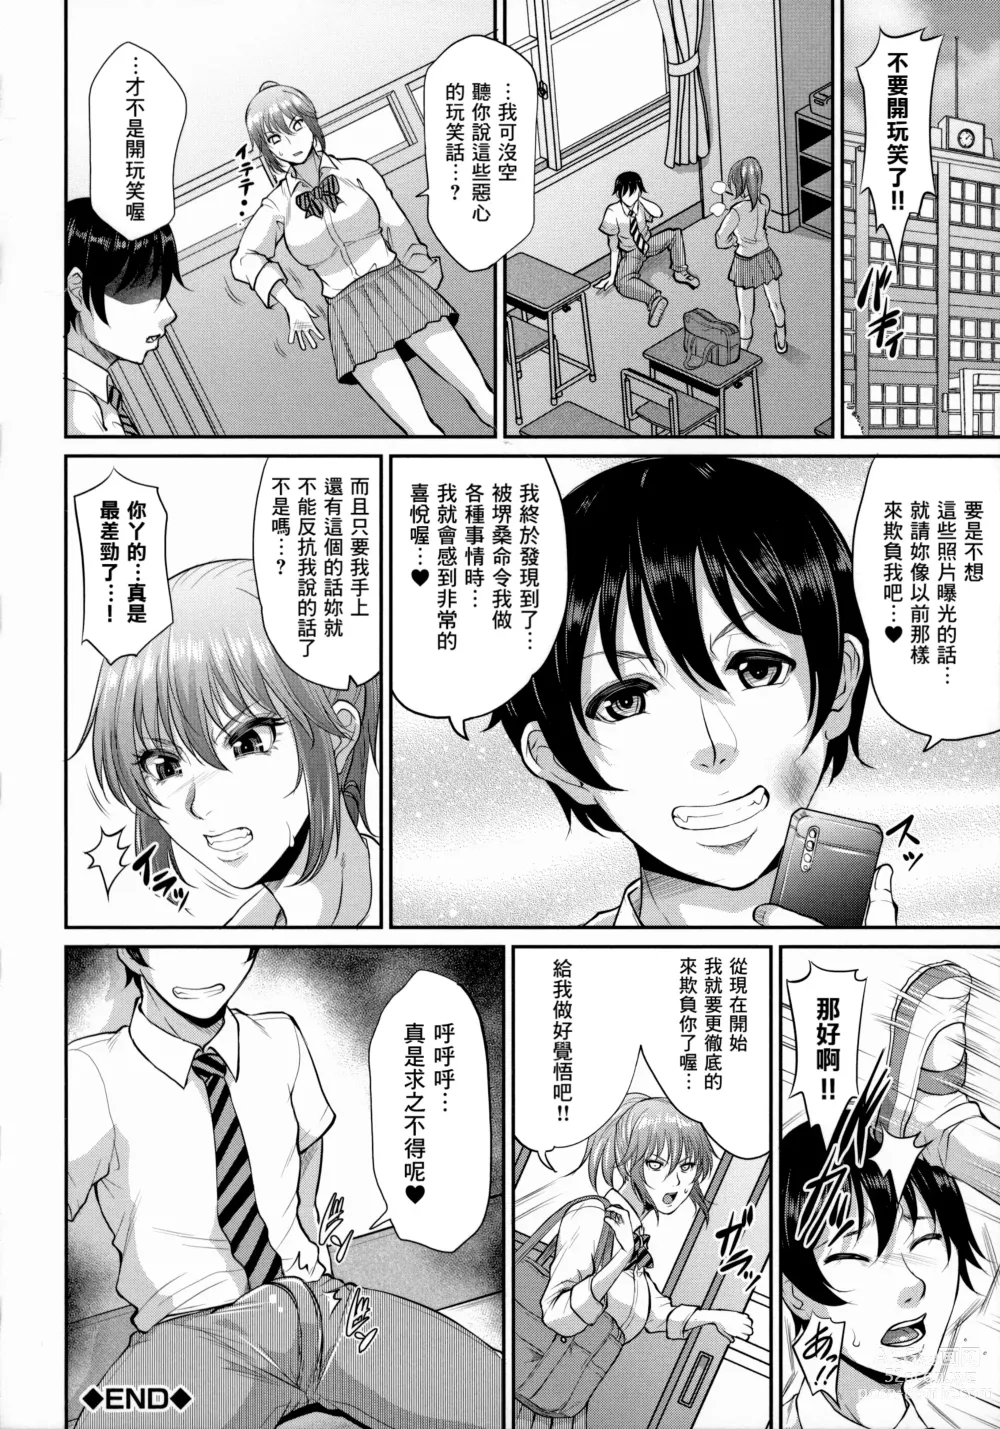 Page 38 of manga Ijimecco